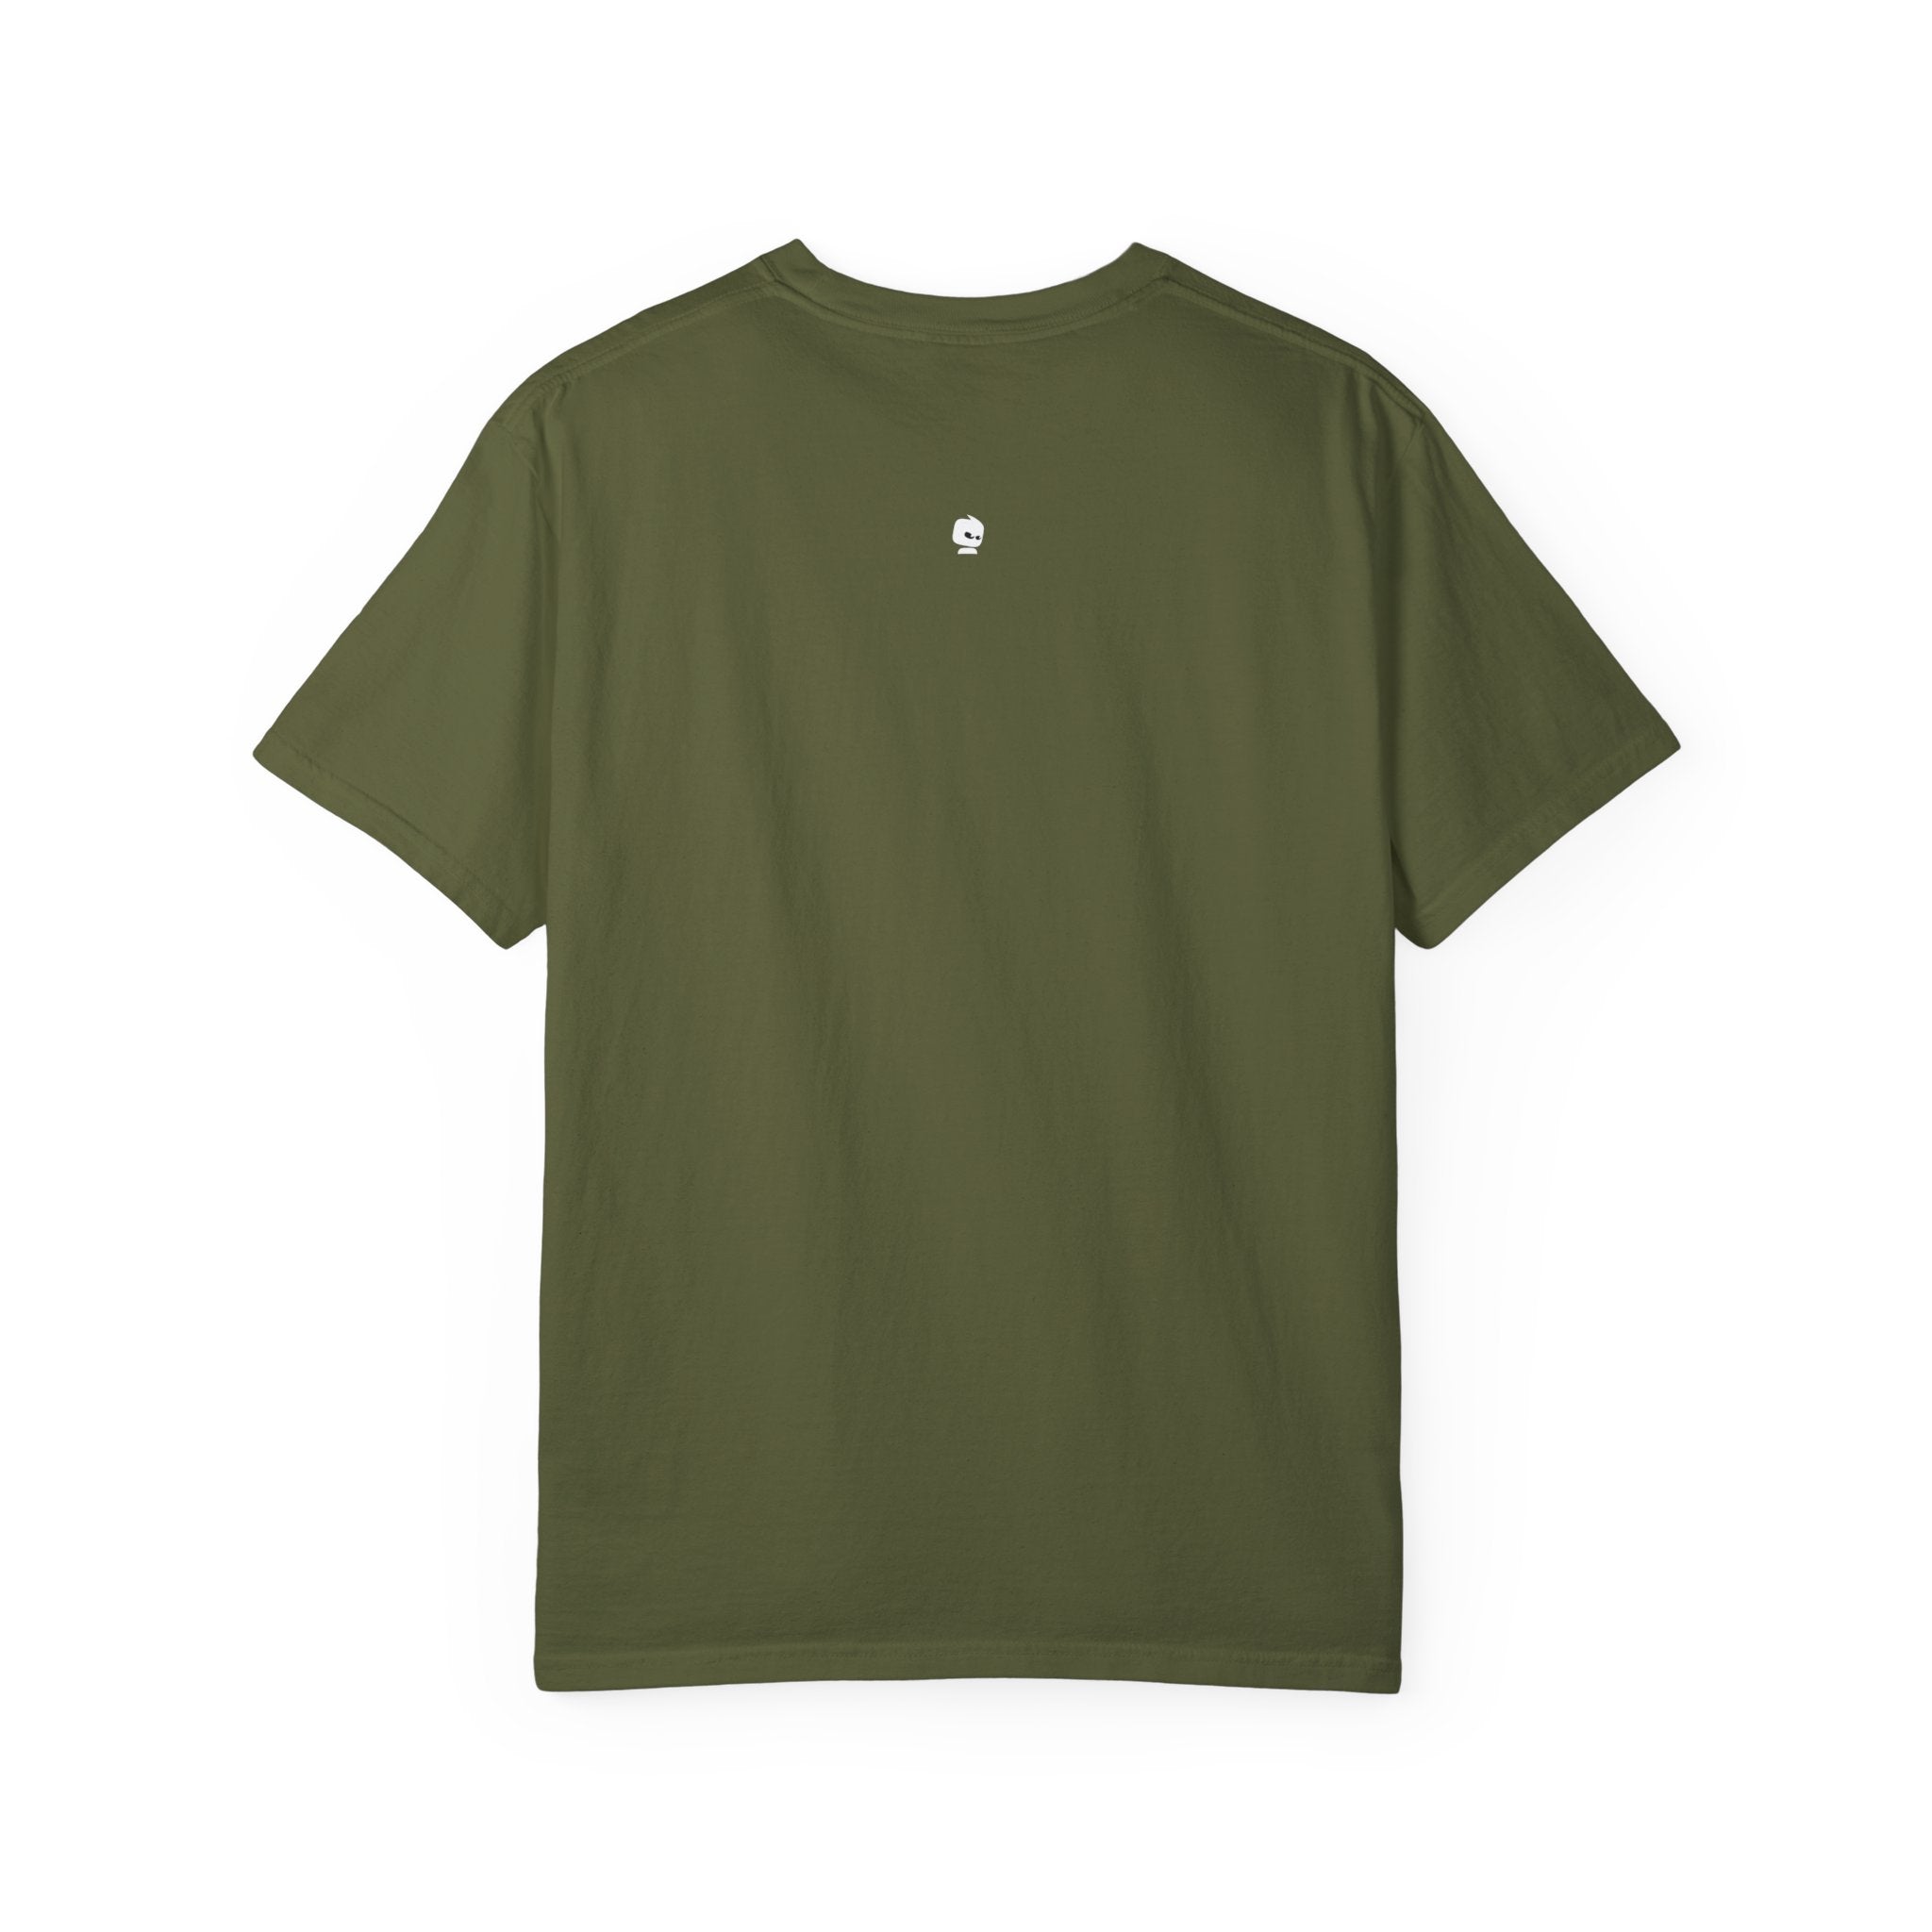 TRAVEL BUDDY Unisex Garment-Dyed T-shirt